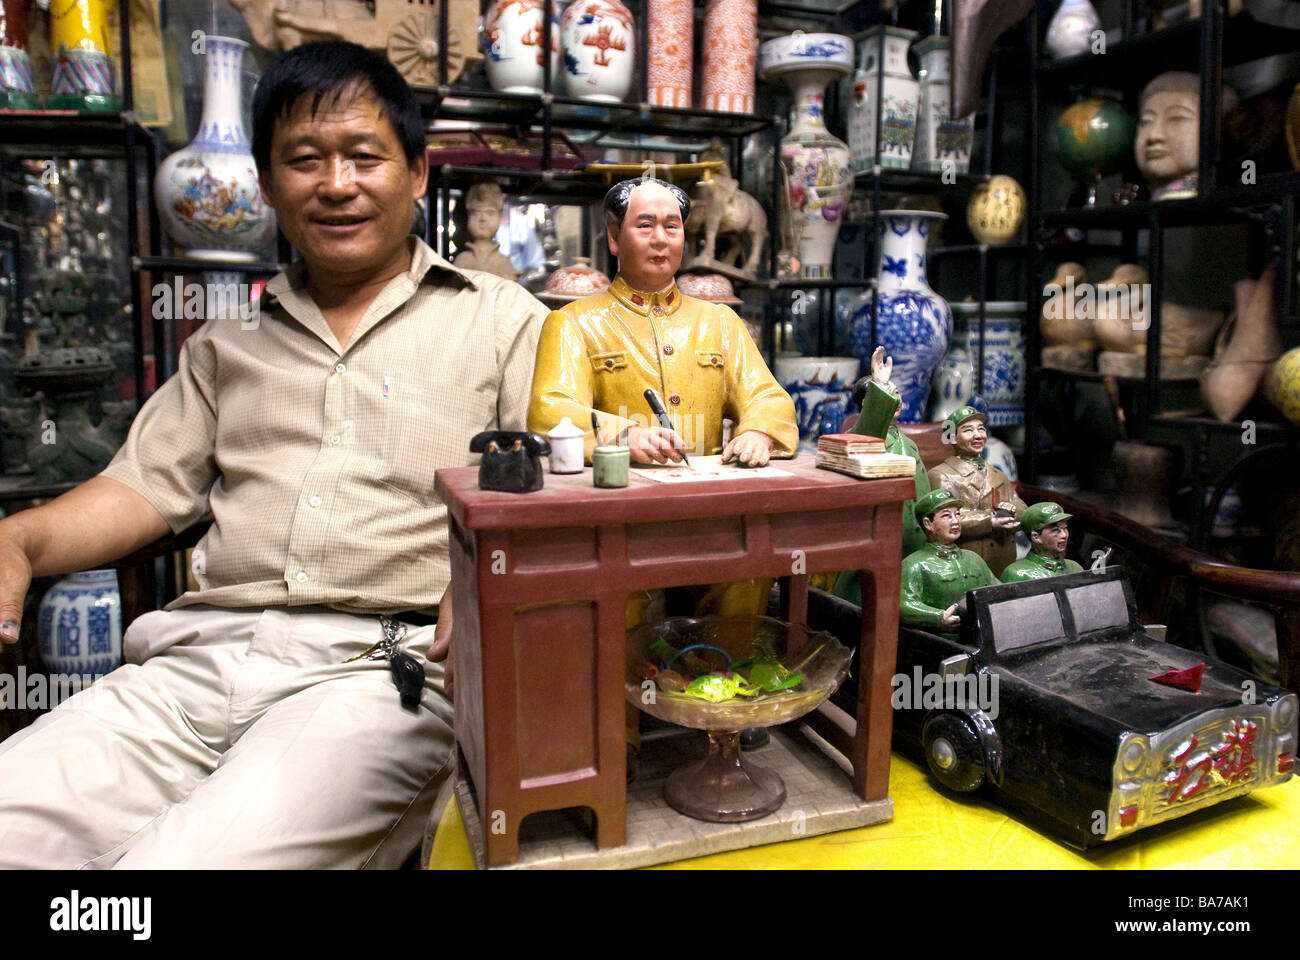 China, Beijing, verkaufte Objekte Whorshipping Mao Zedong auf dem Antiquitätenhändler Straße Stockfoto